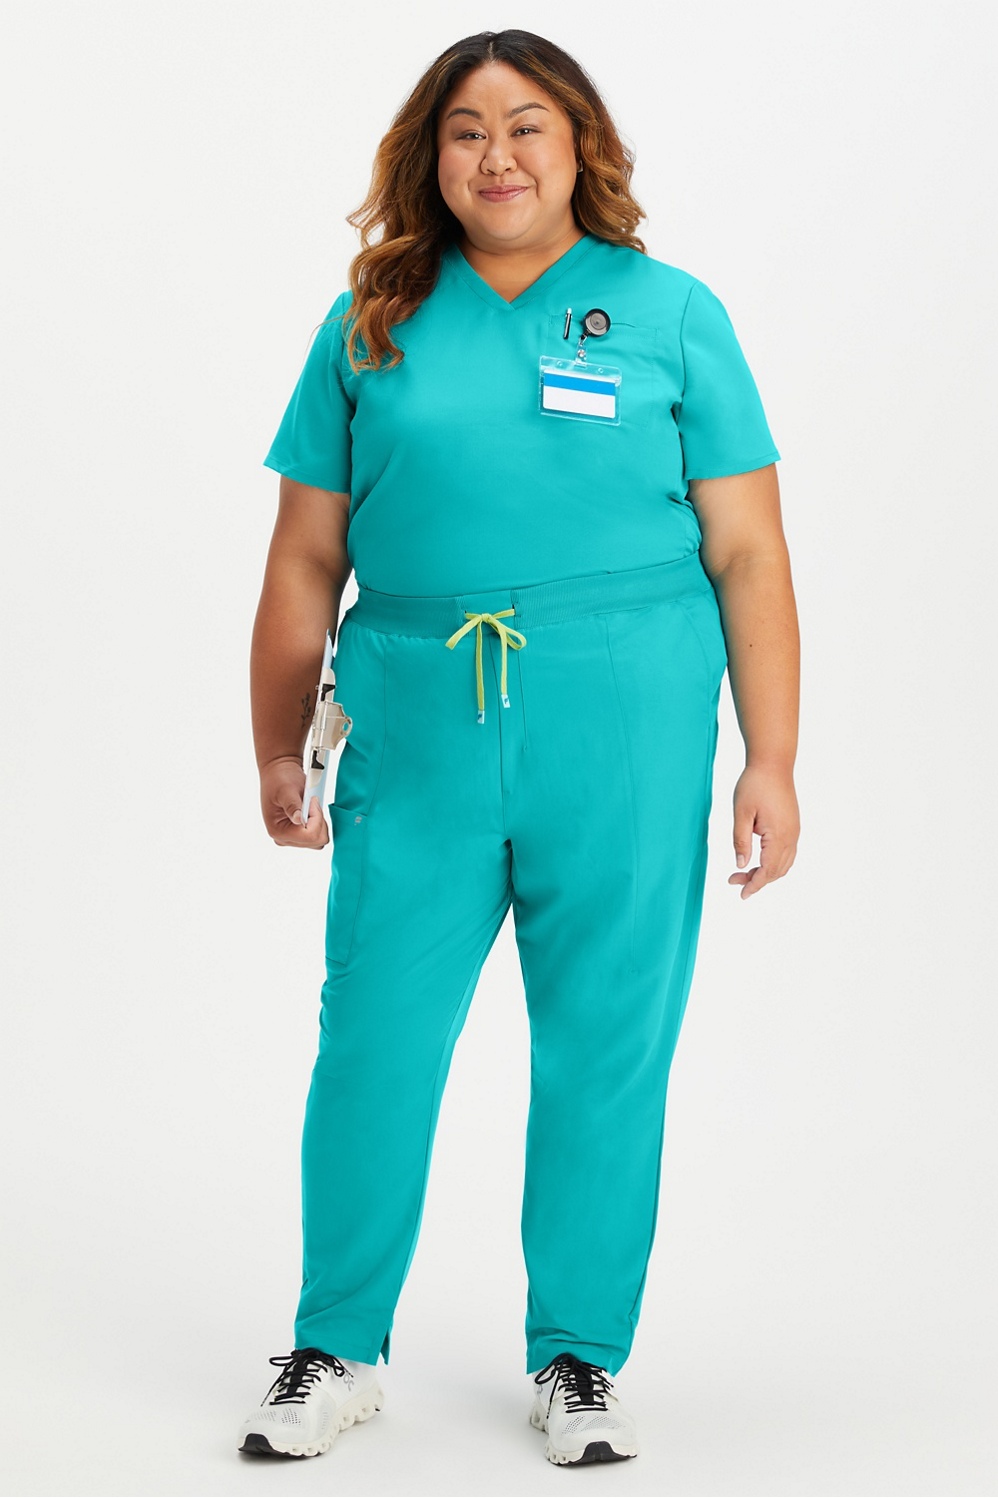 Fabletics Scrubs Review By Nurse Shawny: Best Scrubs For Nurses** 